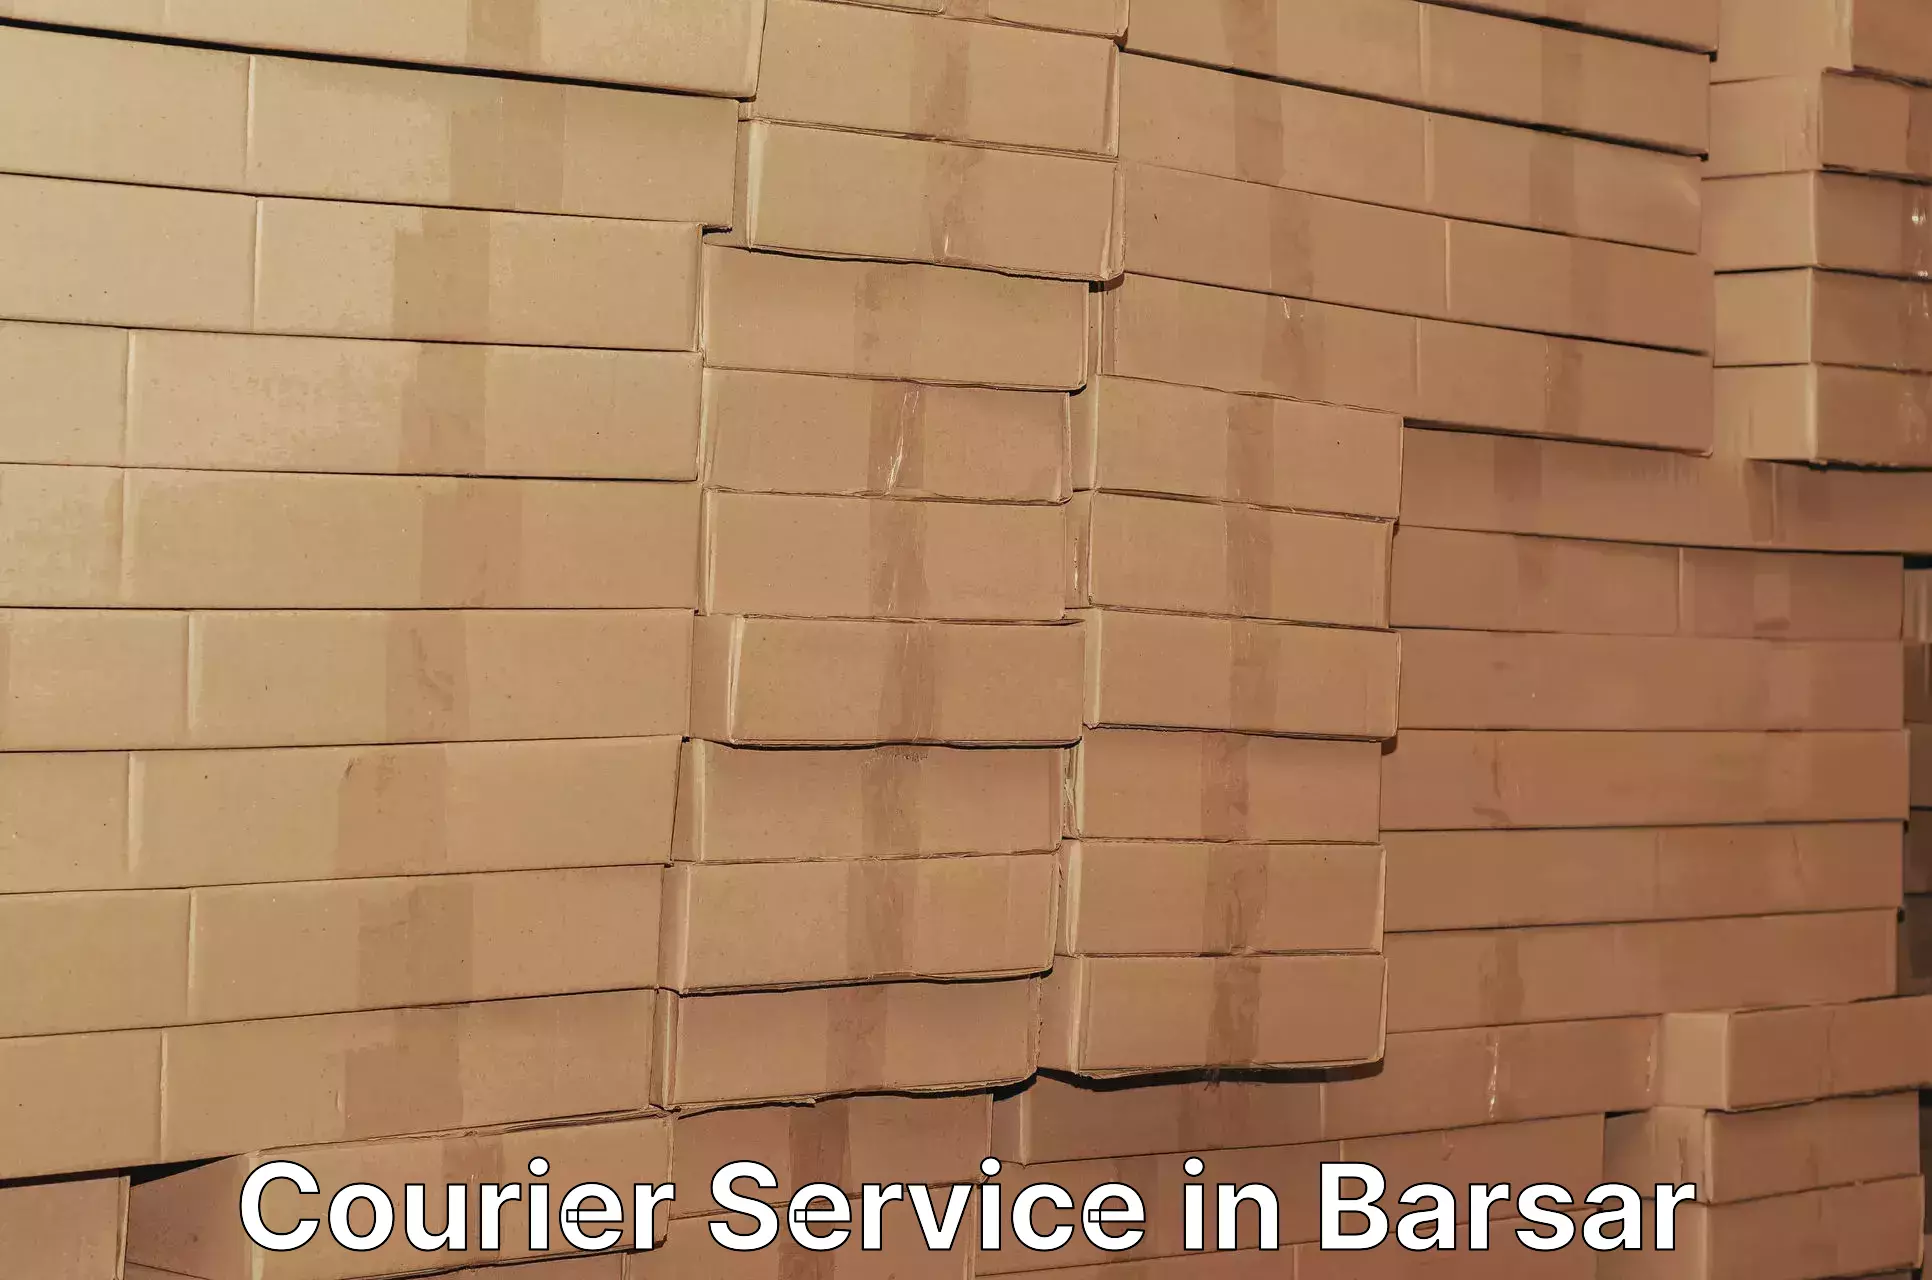 Seamless shipping experience in Barsar